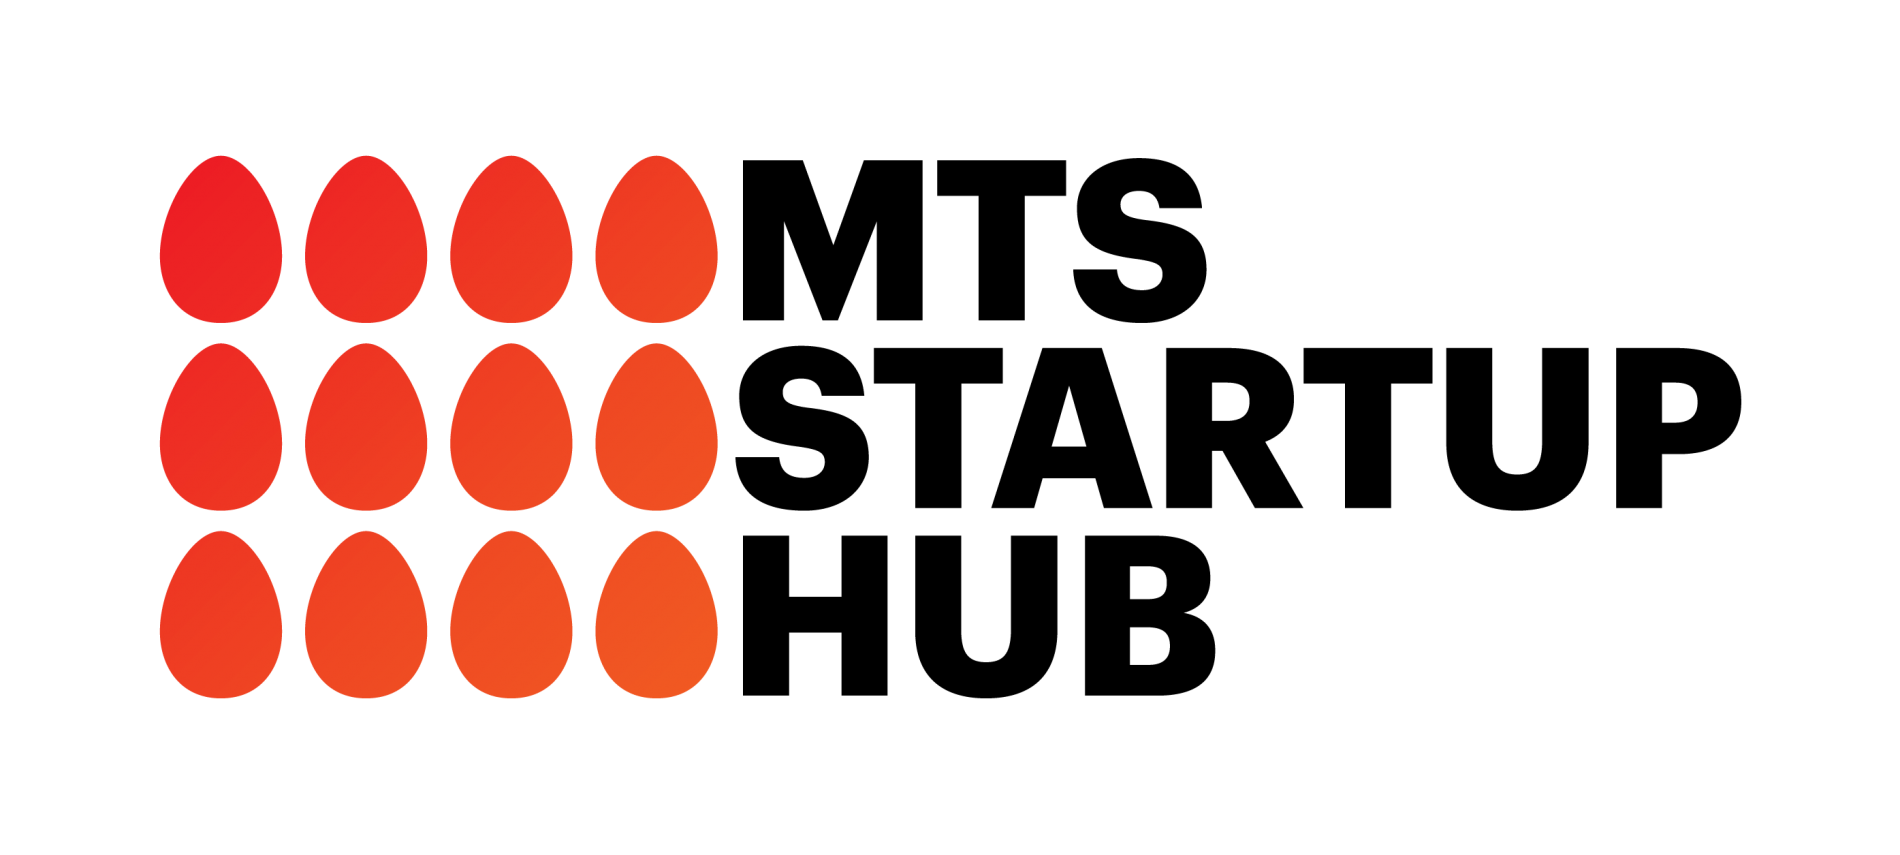 МТС Венчурный фонд - МТС Инвестиции - МТС Центр инноваций - MTS StartUp Hub